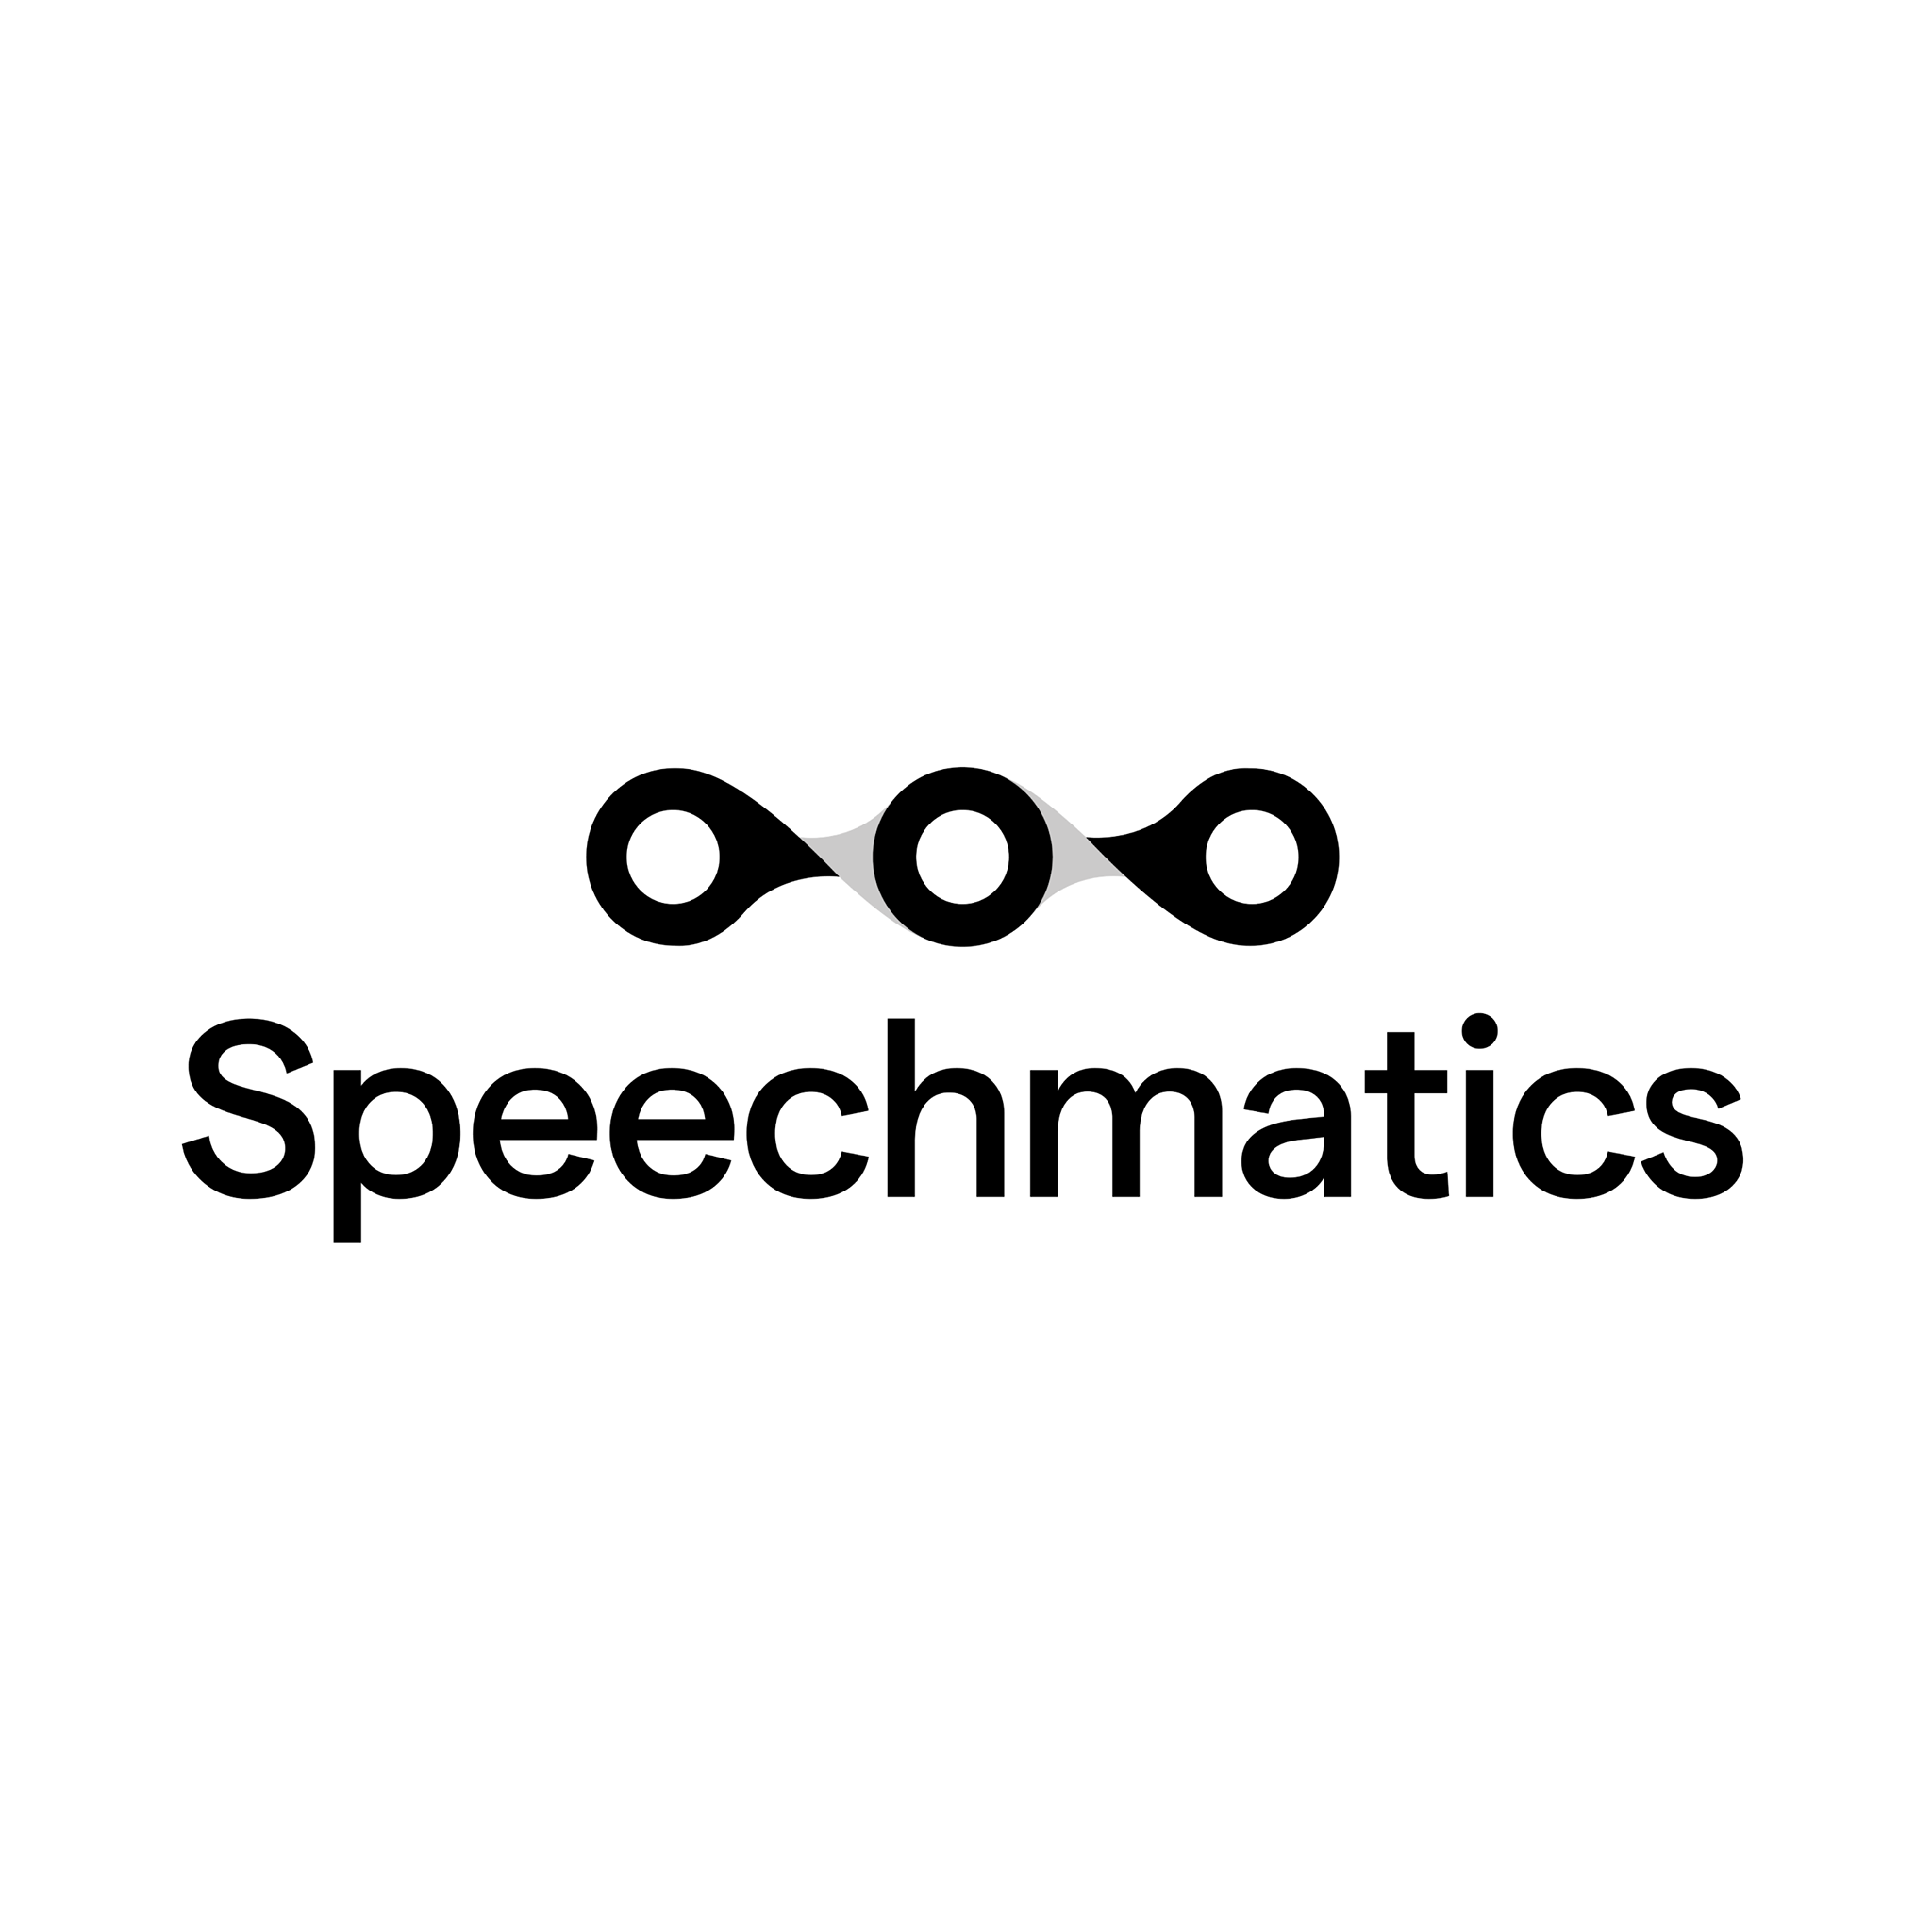 Speechmatics Limited